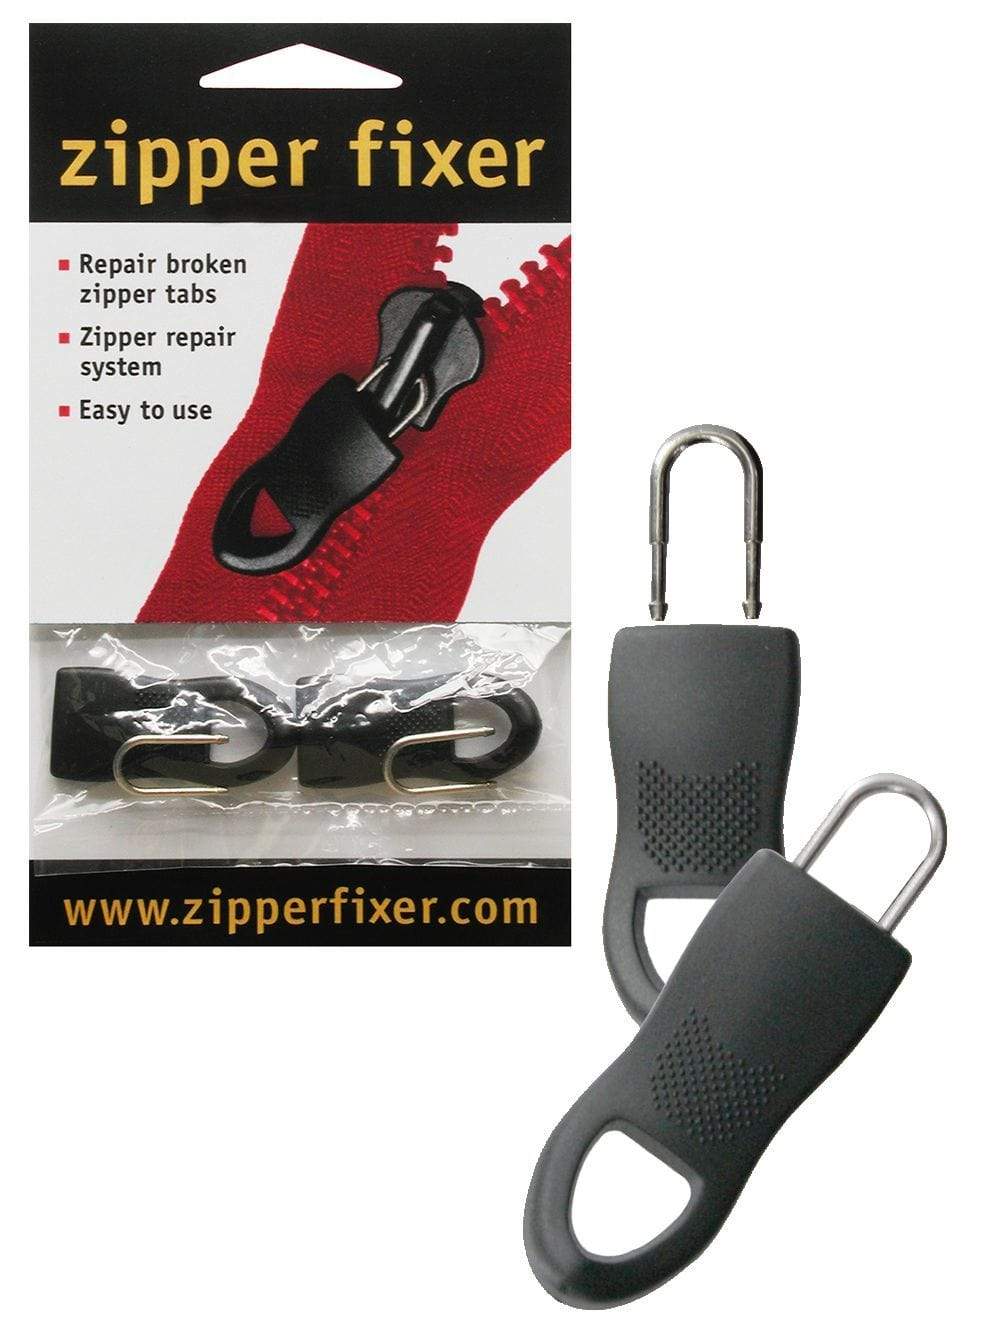 Ohio Travel Bag 1" Black, Small Zipper Fixer 2 Pack, Plastic, #ZF-3-PK ZF-3-PK